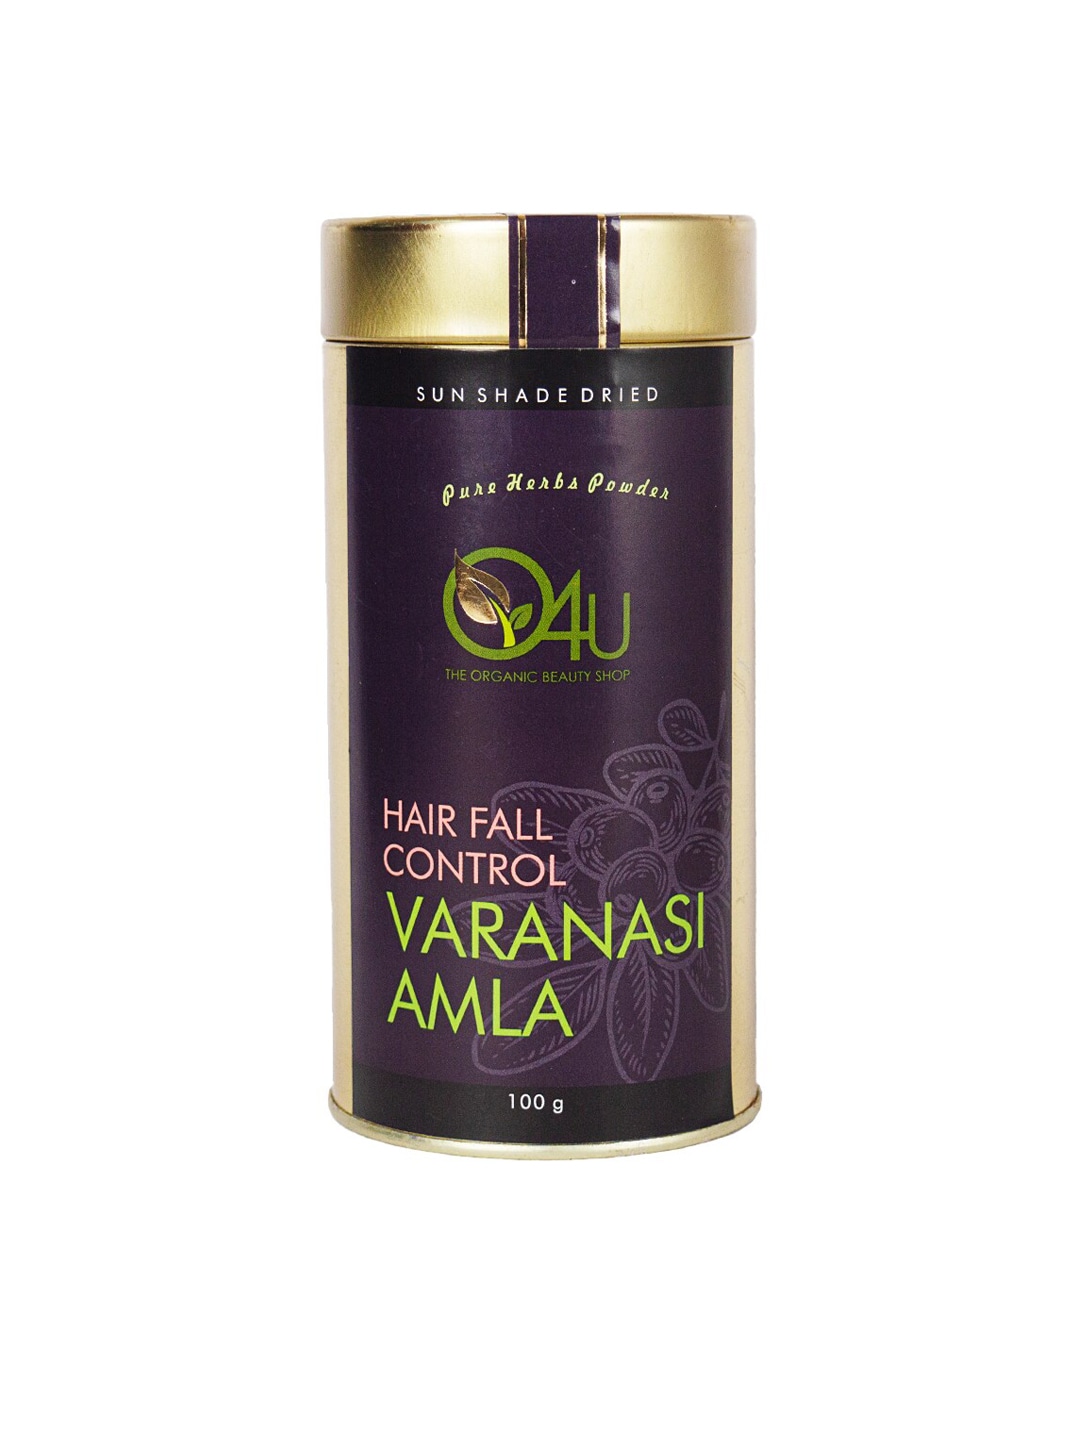 O4U Hair Fall Control Varanasi Amla Powder-100 g Price in India